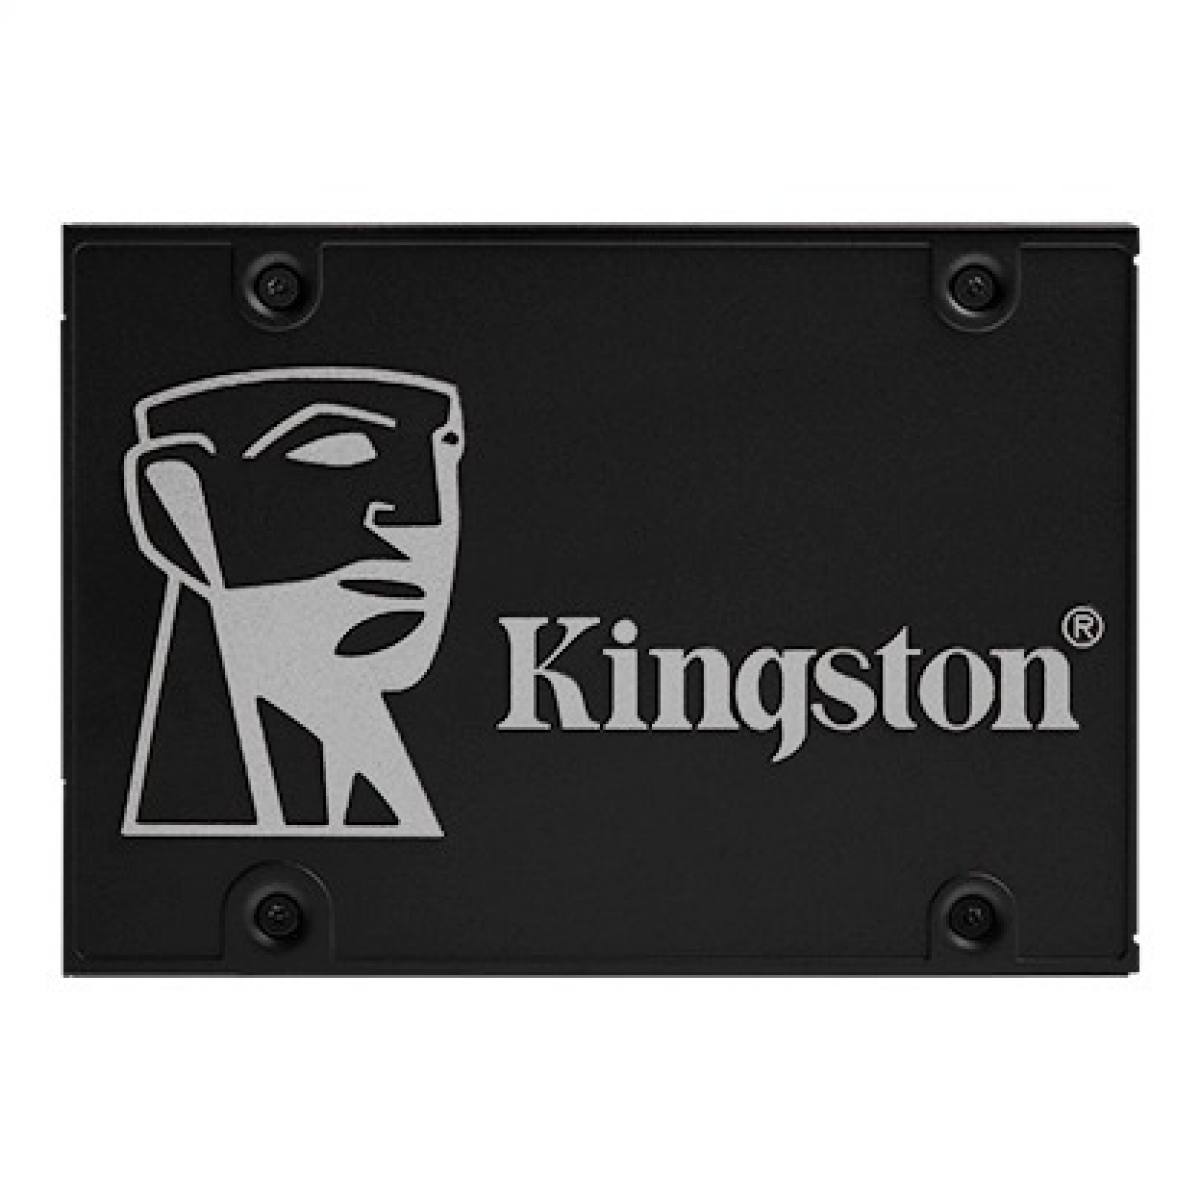 SSD Kingston SKC600 256GB SATA